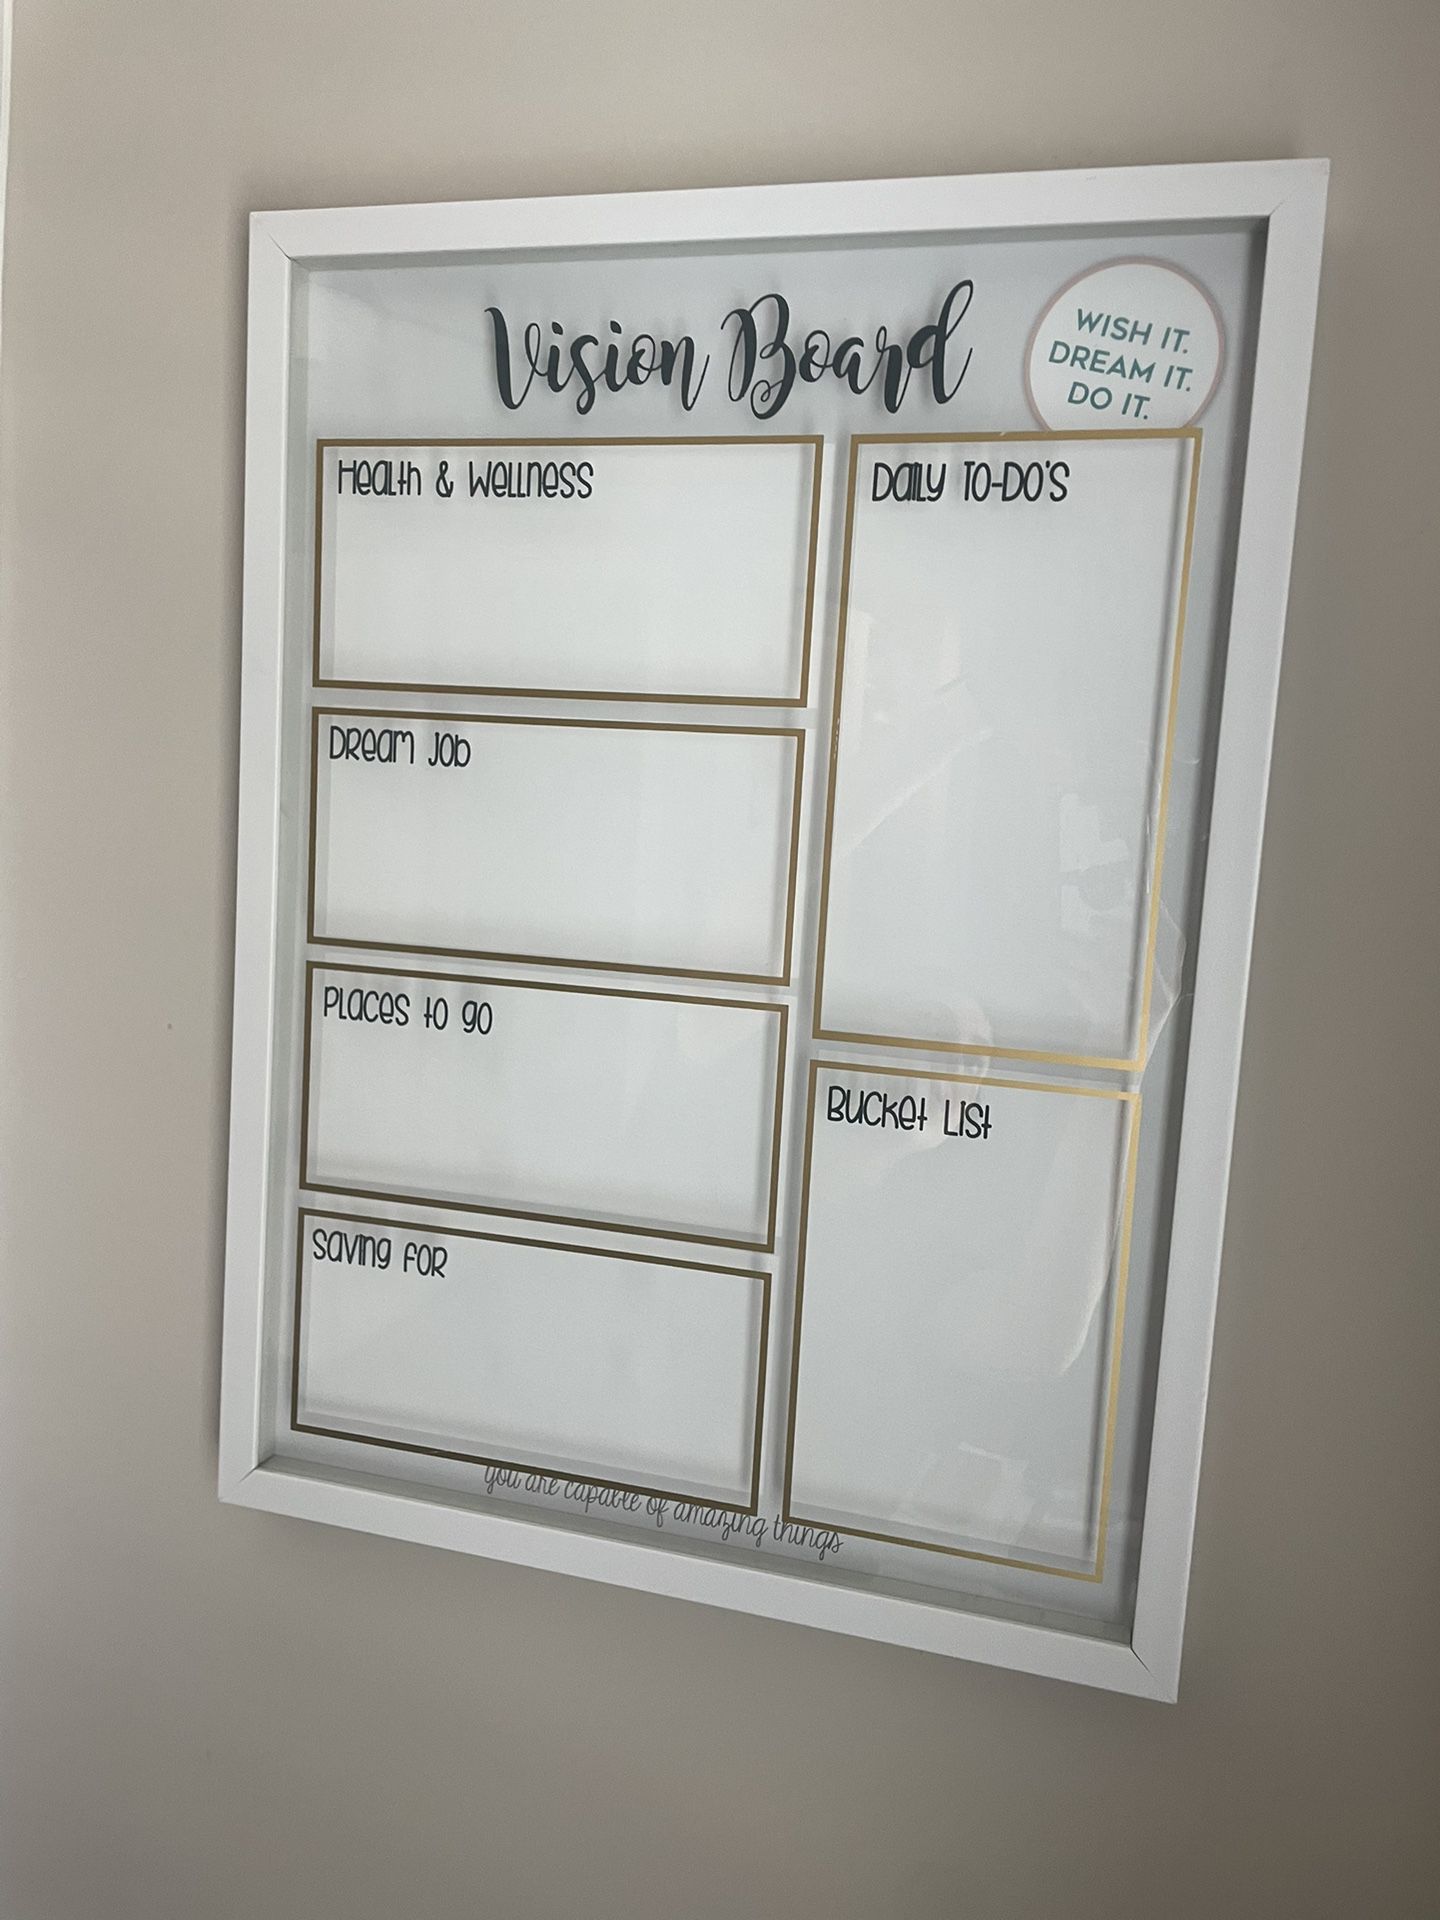 Buy Dry Erase Vision Board - Framed Dream Vision Board Wall